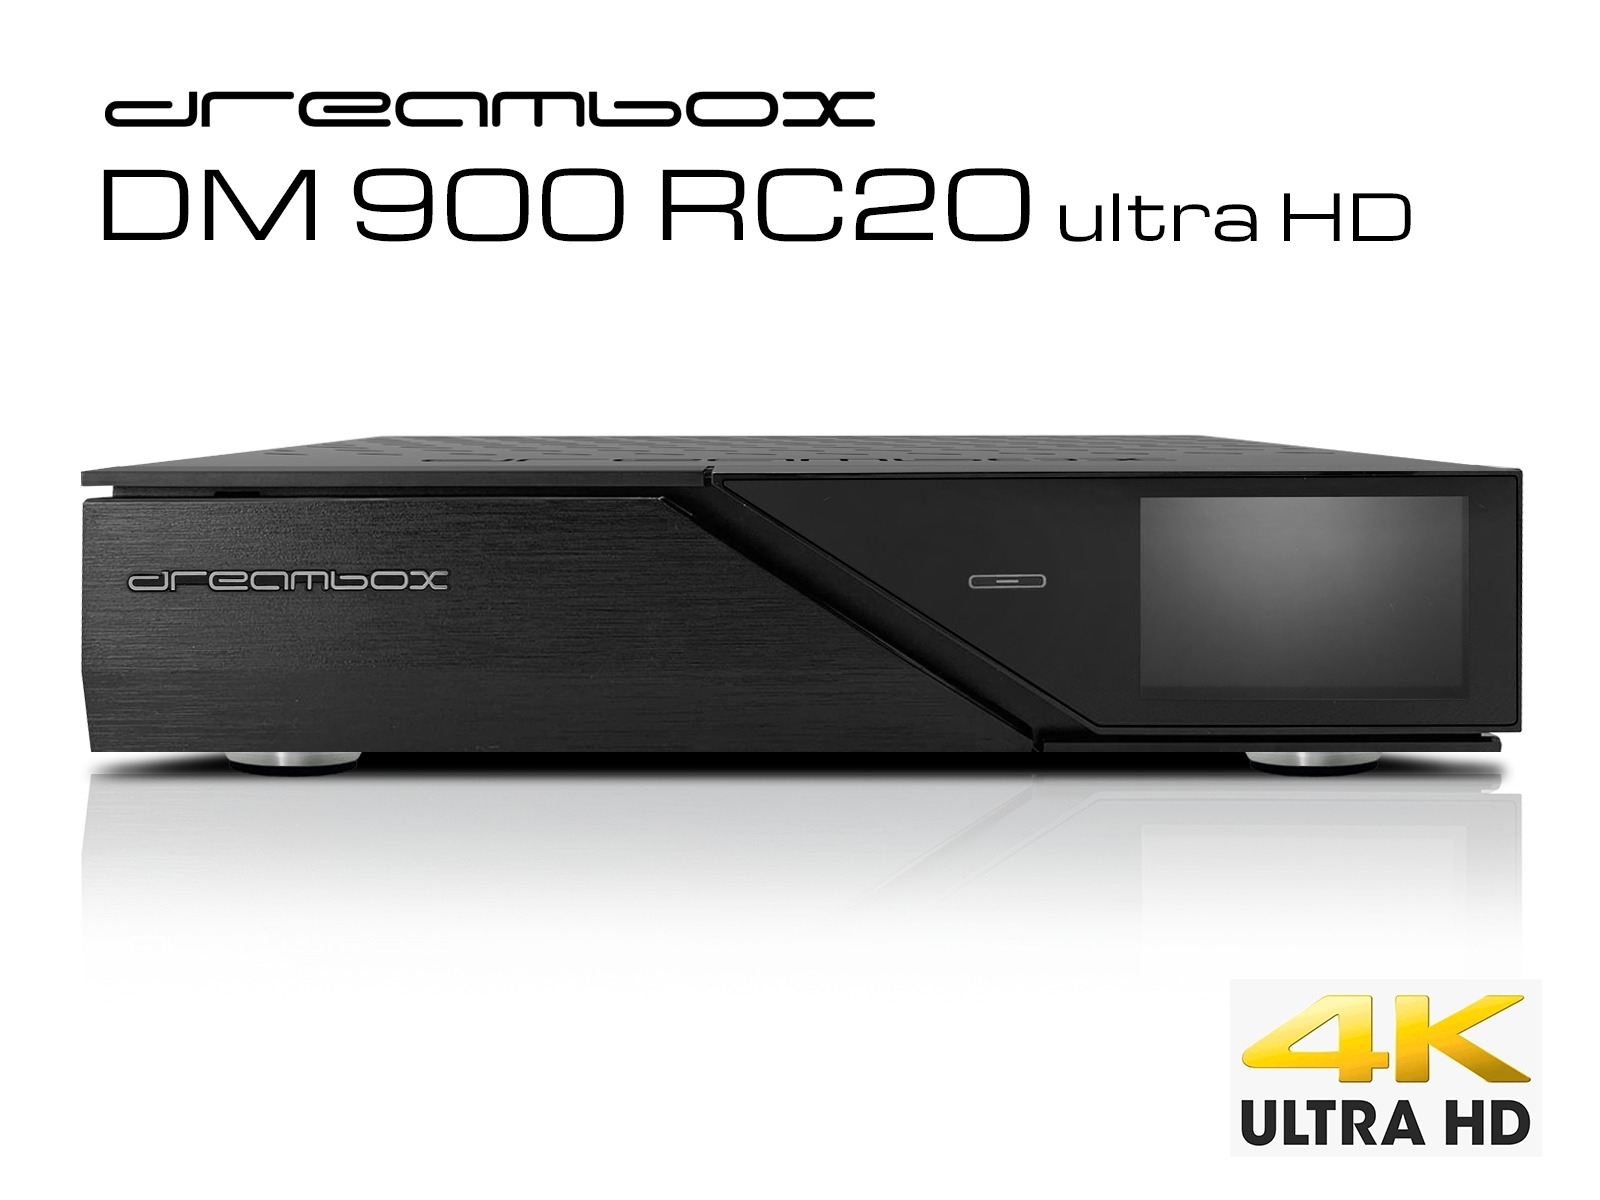 Dreambox DM900 RC20 UHD 4K 1x Dual DVB-S2X MS Tuner 2 TB HDD E2 Linux PVR Receiver